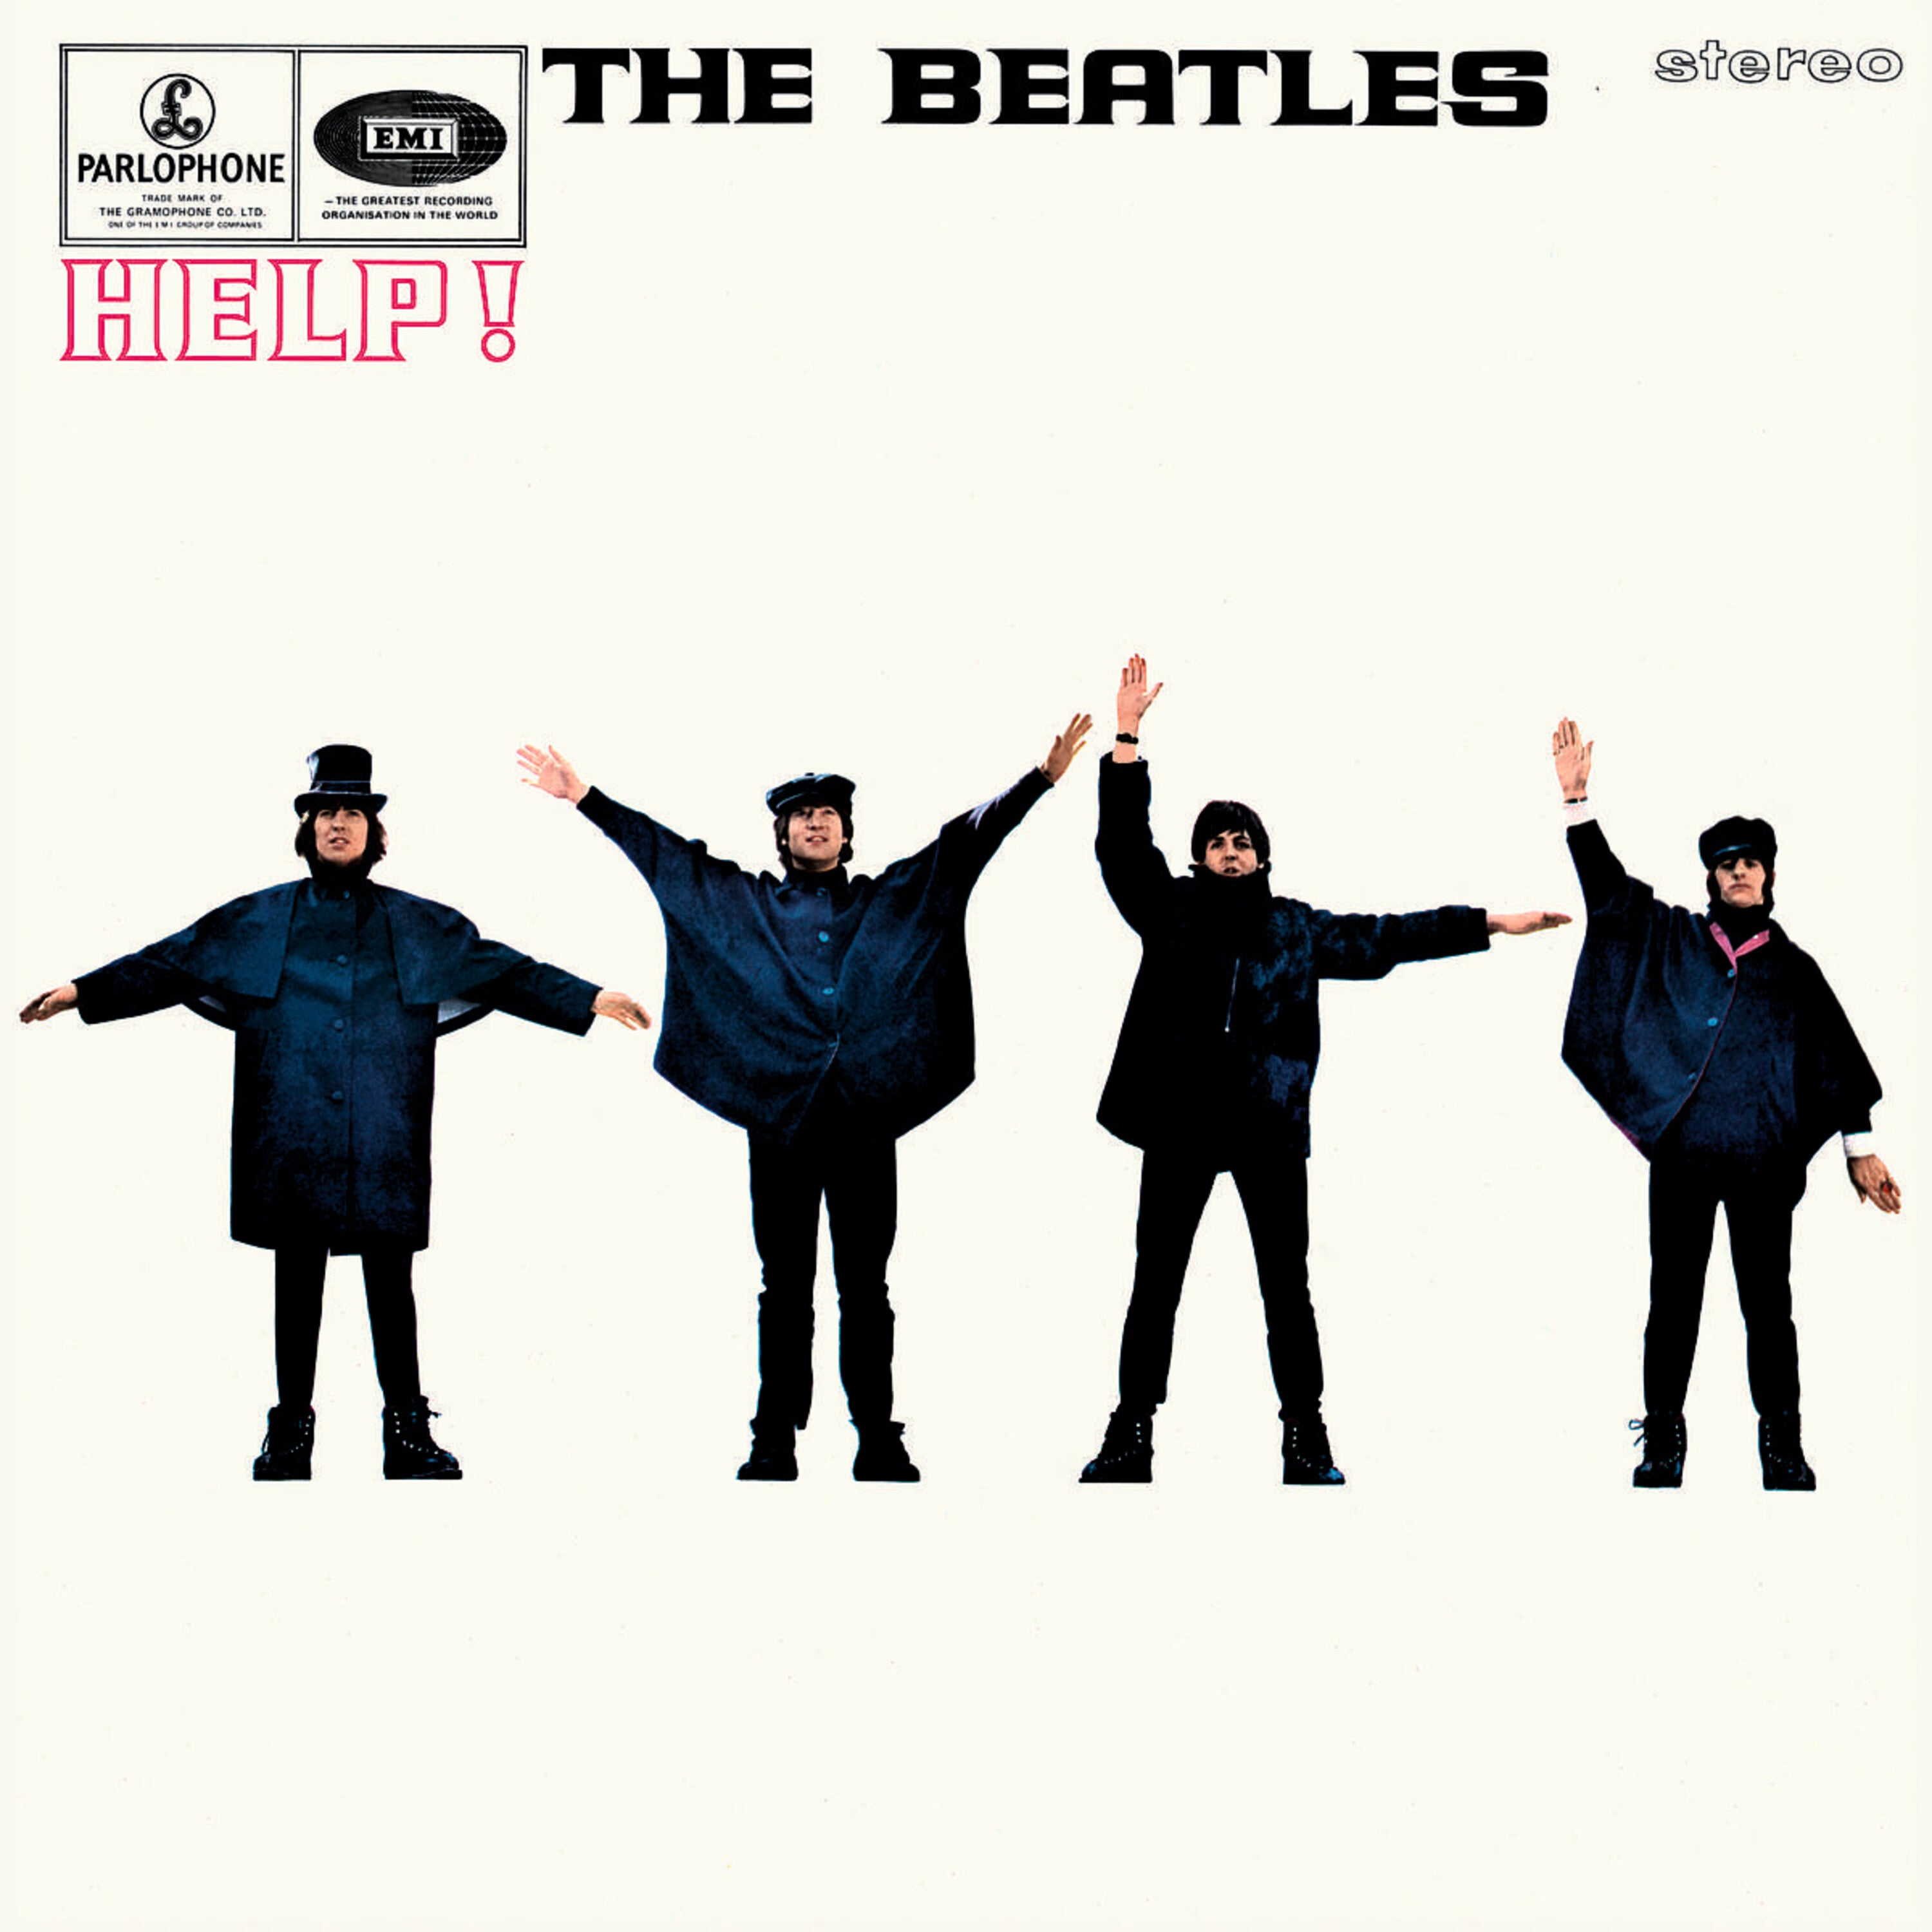 https://images.bravado.de/prod/product-assets/product-asset-data/beatles-the/the-beatles-international-1/products/142363/web/309002/image-thumb__309002__3000x3000_original/The-Beatles-Help-Vinyl-142363-309002.jpg